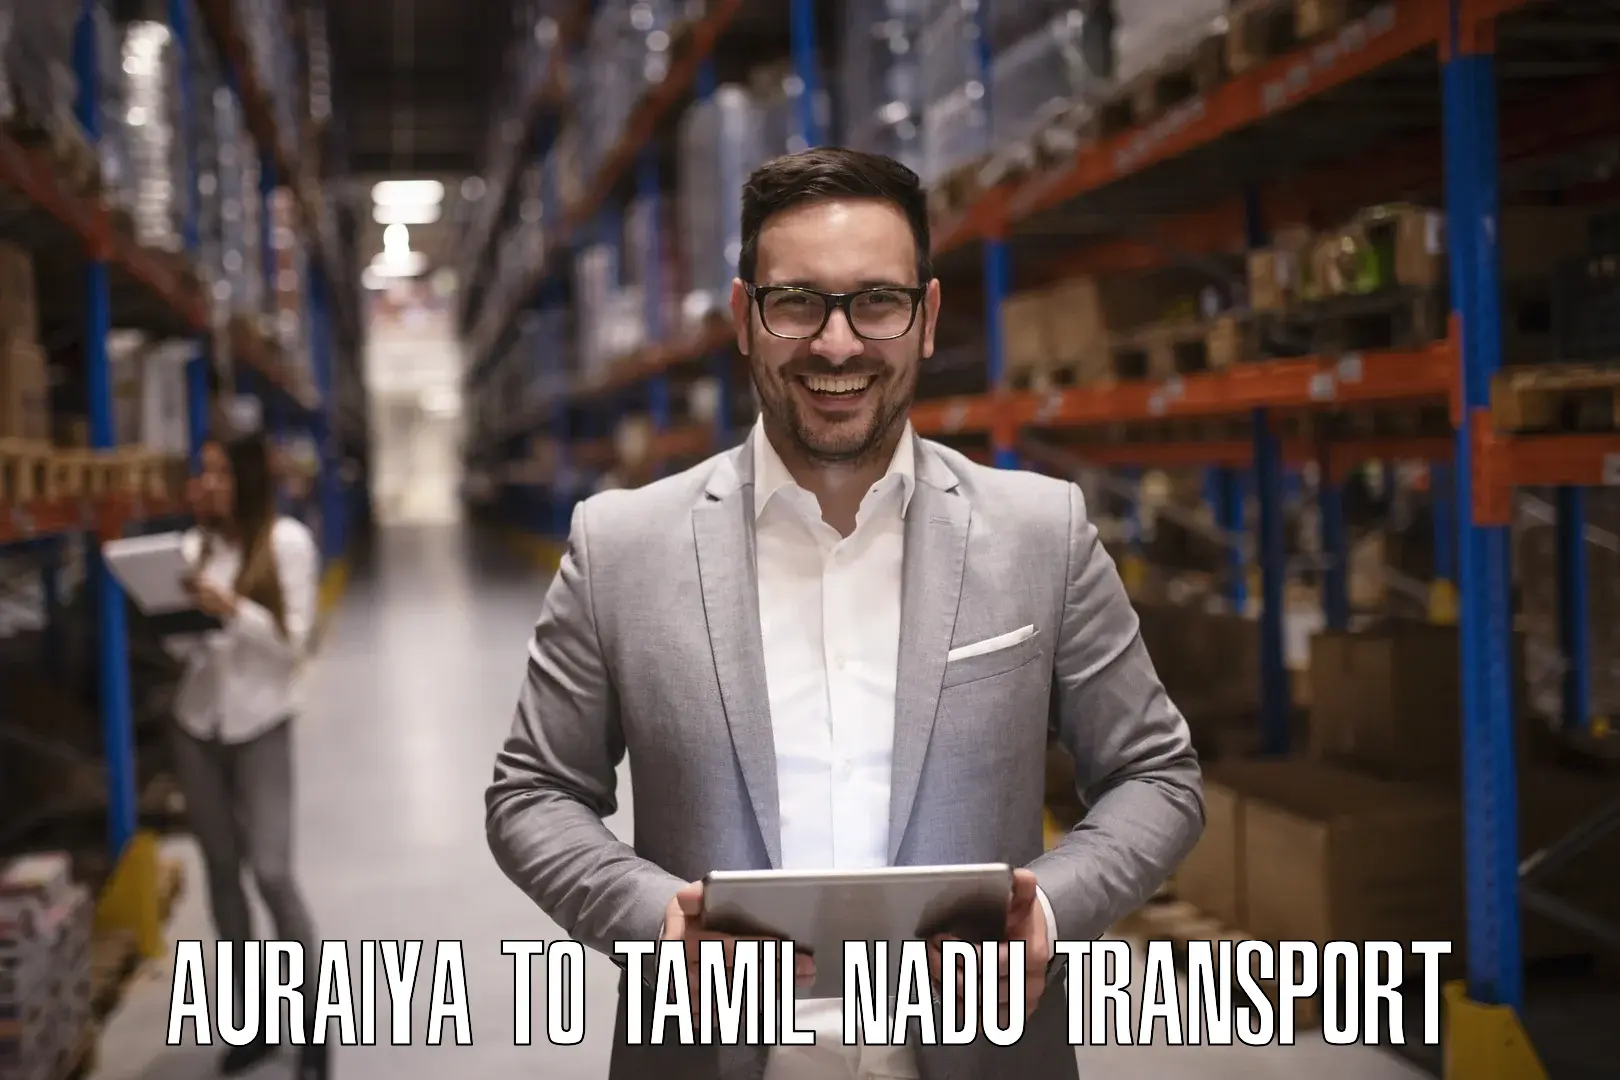 Daily transport service Auraiya to Tamil Nadu